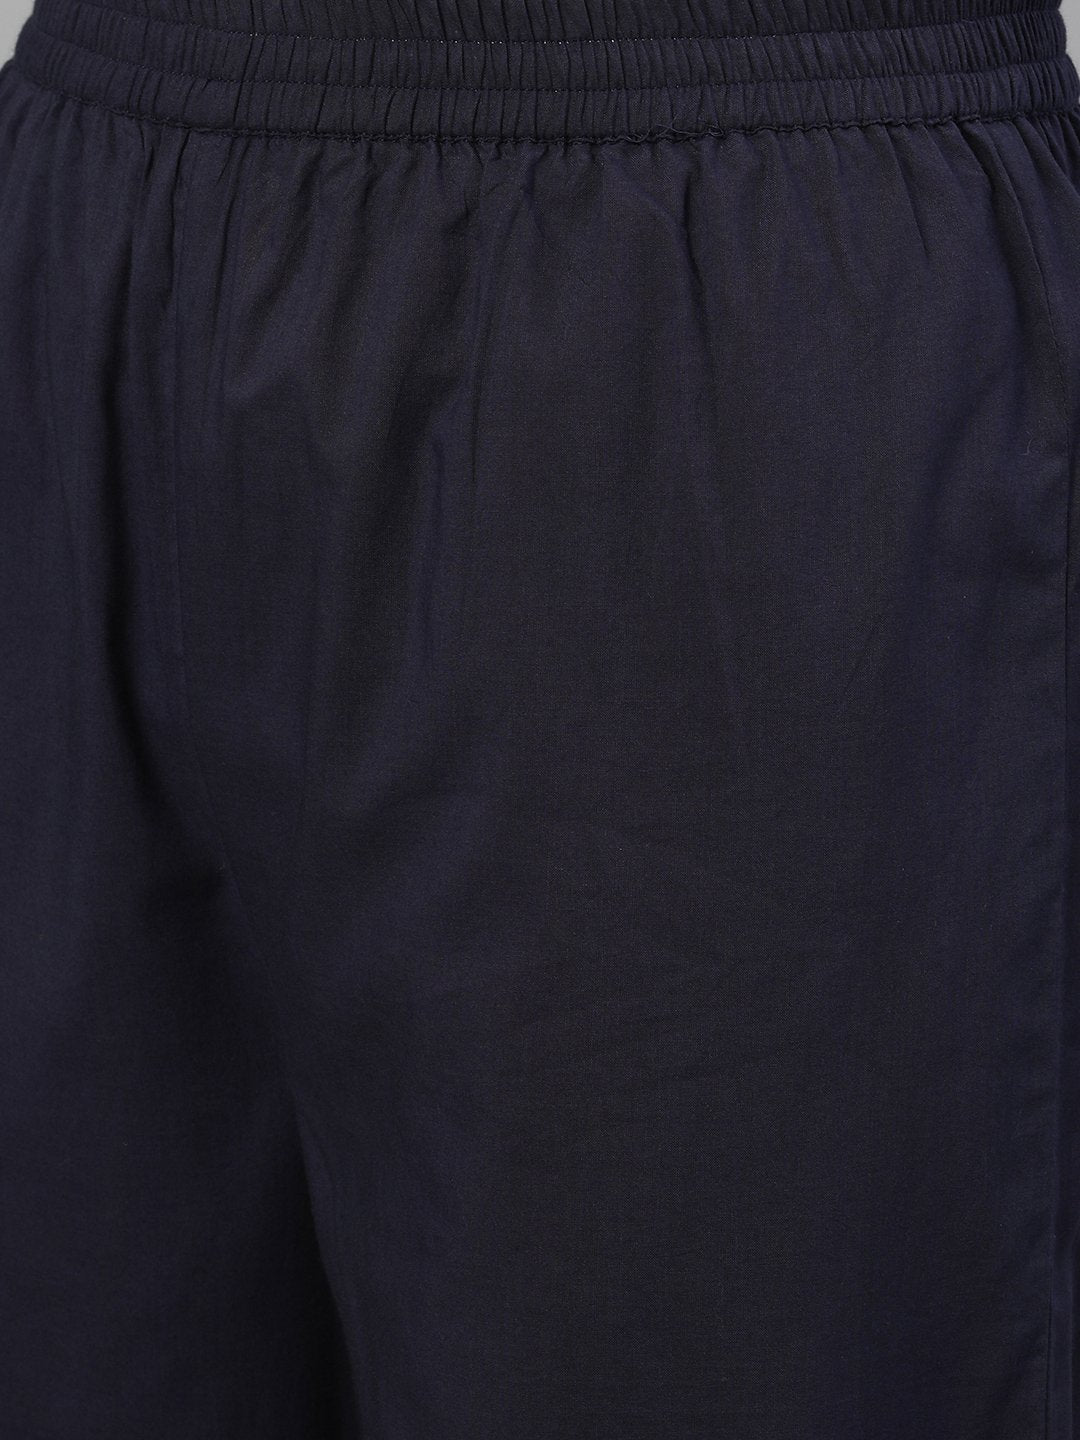 Women's Black Three-Quarter Sleeves Printed Kurta-Palazzo With Pockets And Face Mask - Nayo Clothing